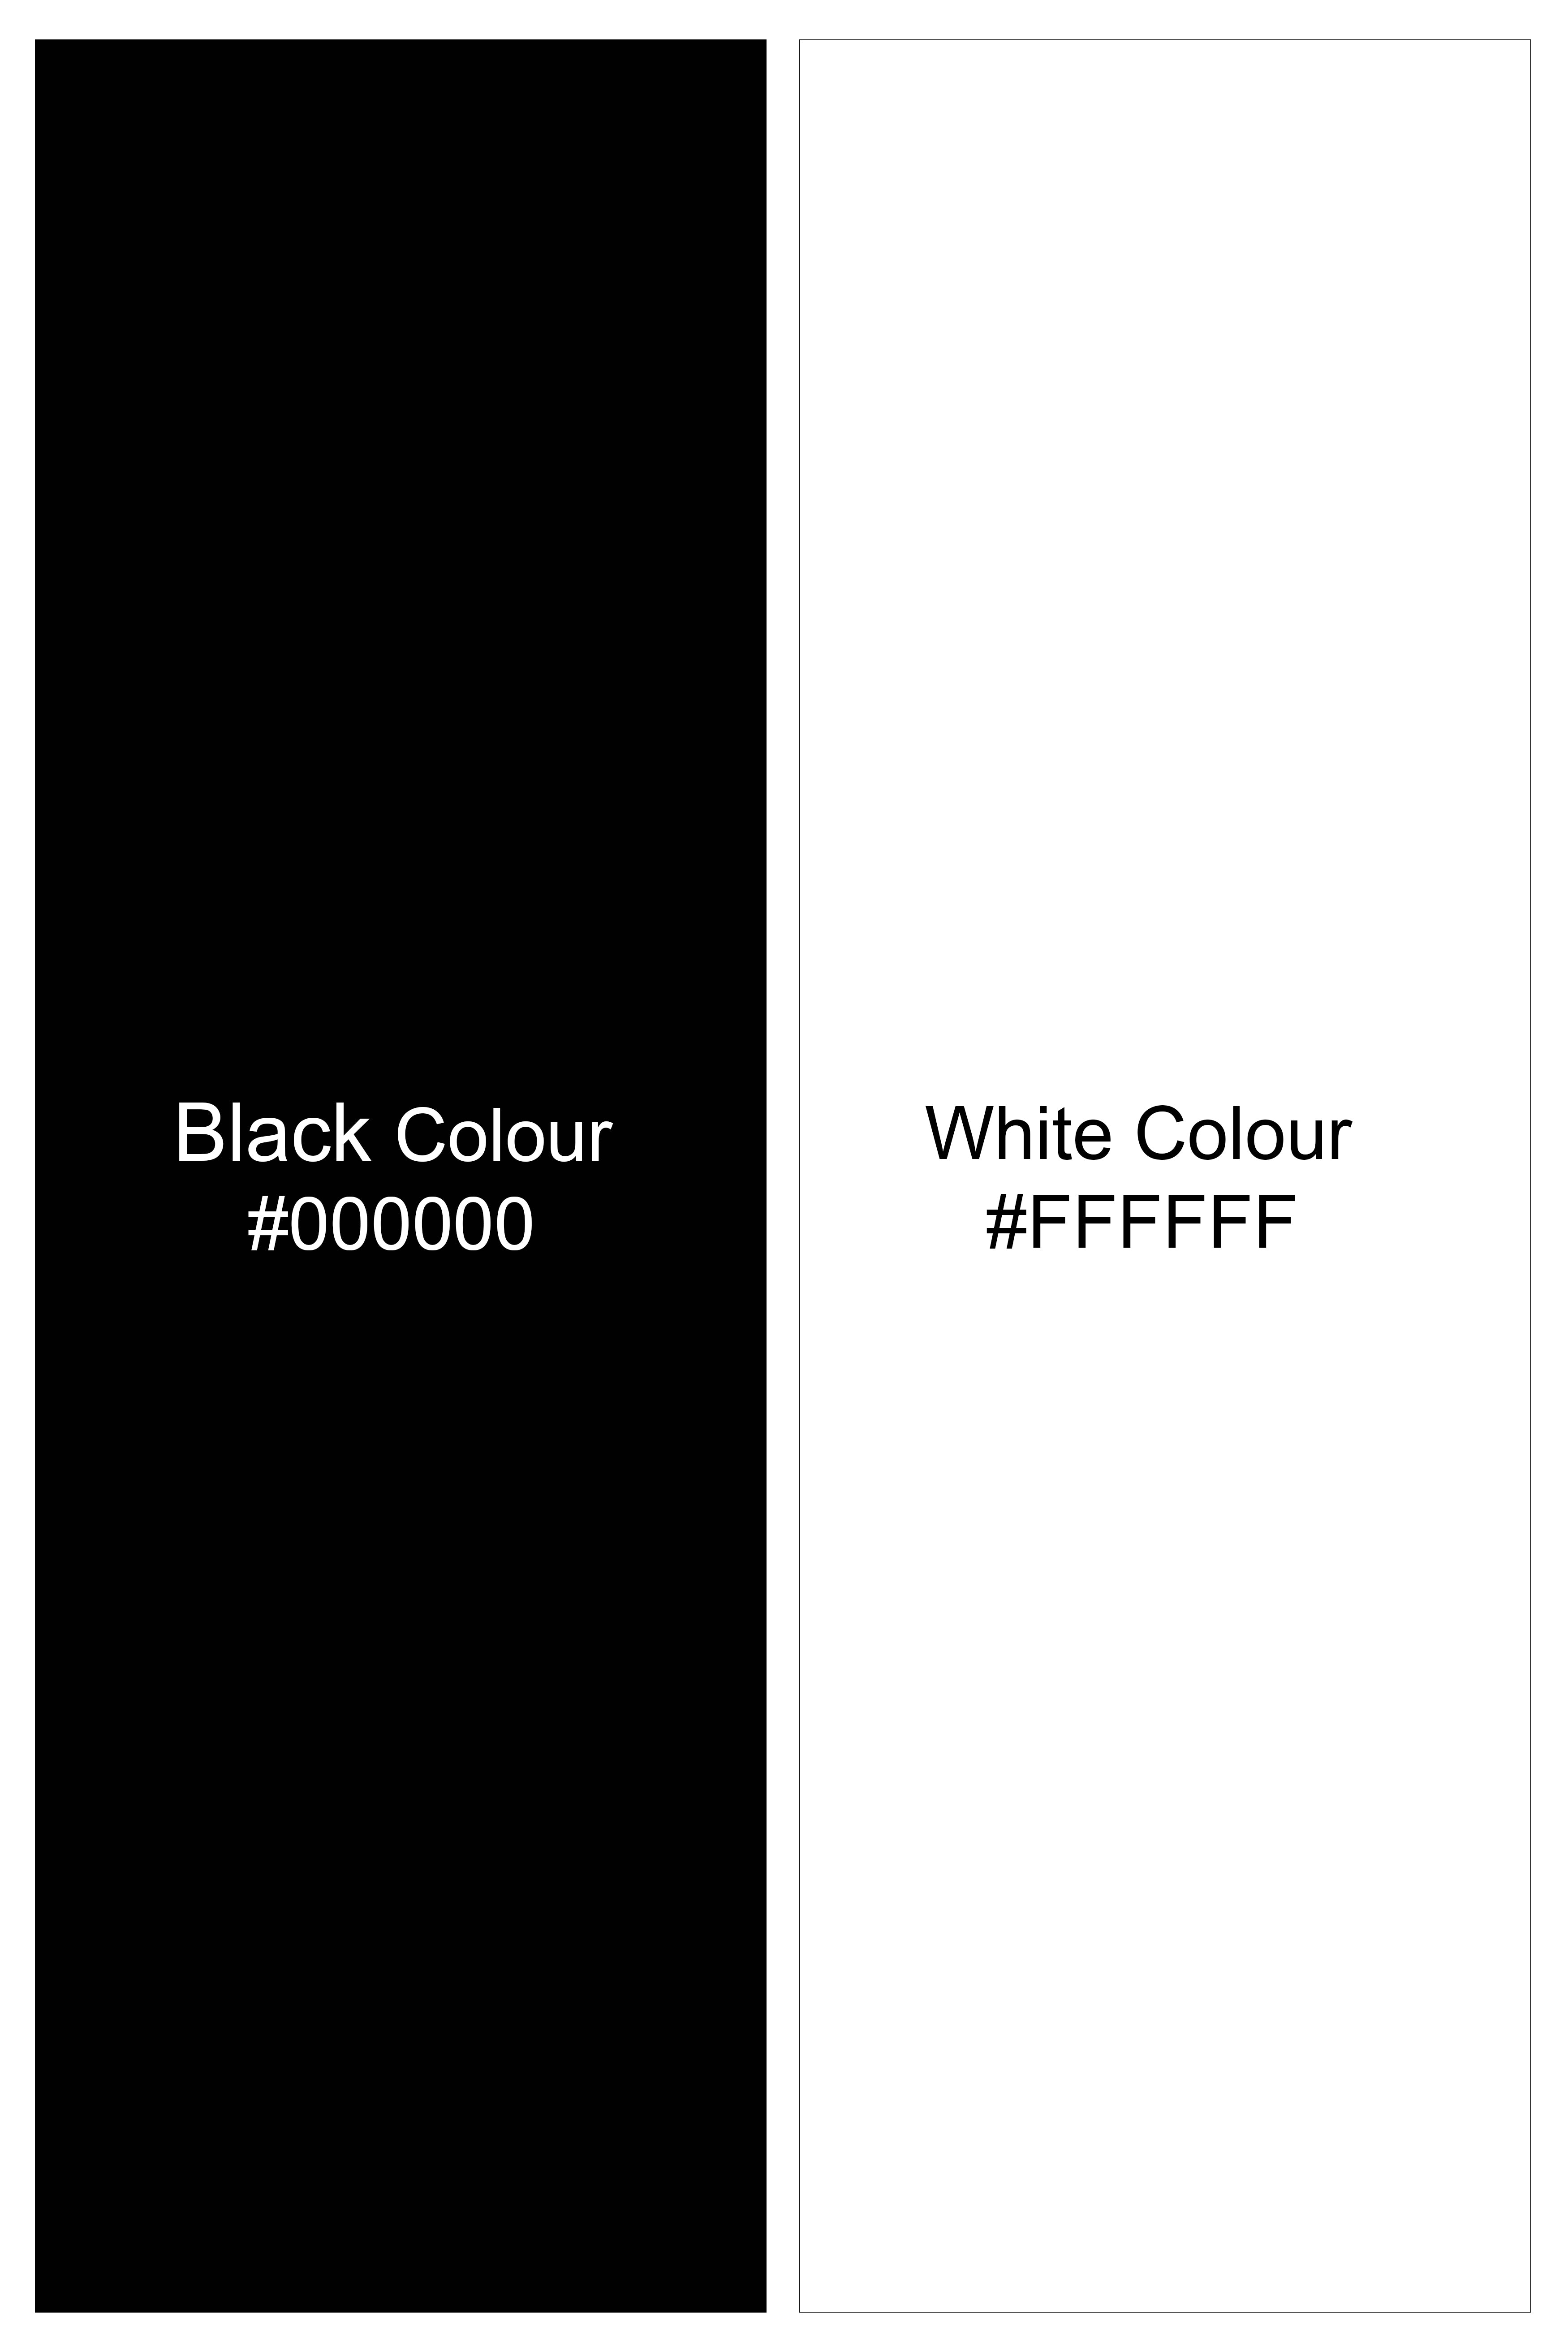 Jade Black and White Spiral Embroidered luxurious Linen Designer Shirt 12048-BLK-E329-38, 12048-BLK-E329-H-38, 12048-BLK-E329-39, 12048-BLK-E329-H-39, 12048-BLK-E329-40, 12048-BLK-E329-H-40, 12048-BLK-E329-42, 12048-BLK-E329-H-42, 12048-BLK-E329-44, 12048-BLK-E329-H-44, 12048-BLK-E329-46, 12048-BLK-E329-H-46, 12048-BLK-E329-48, 12048-BLK-E329-H-48, 12048-BLK-E329-50, 12048-BLK-E329-H-50, 12048-BLK-E329-52, 12048-BLK-E329-H-52